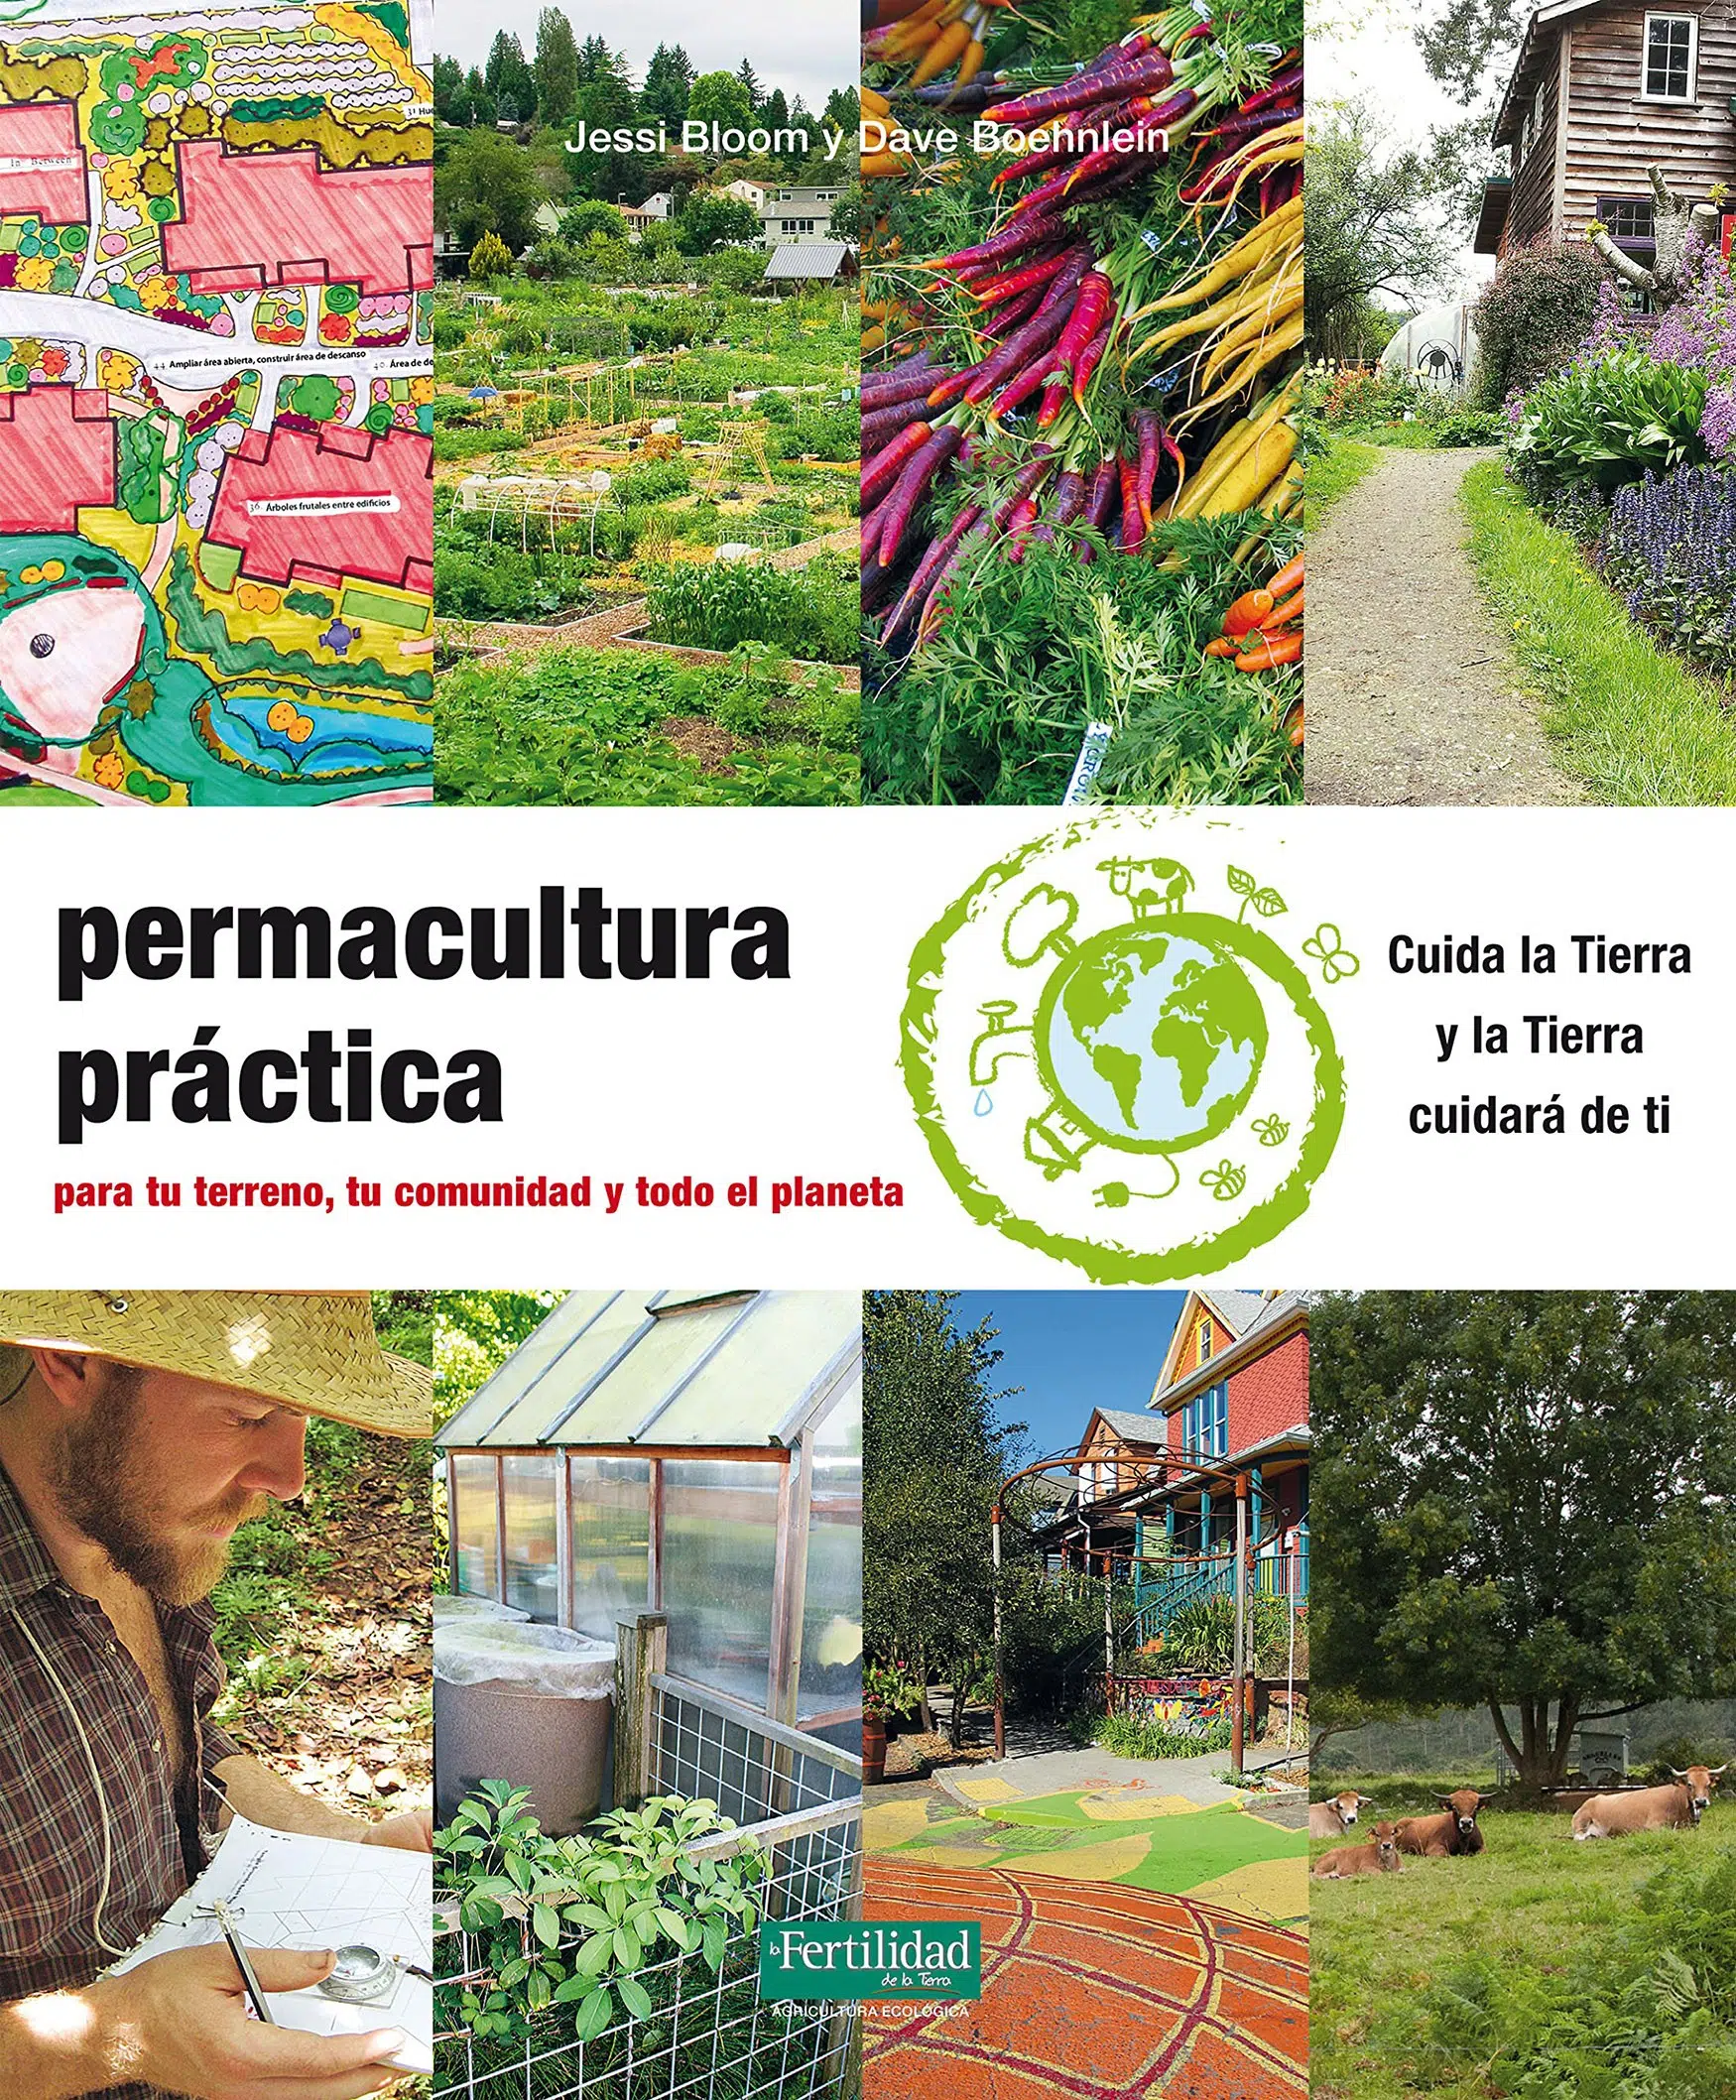 Libro PERMACULTURA PRÁCTICA de Jessi Bloom y Dave Bothnlein. Agricultura ecológica